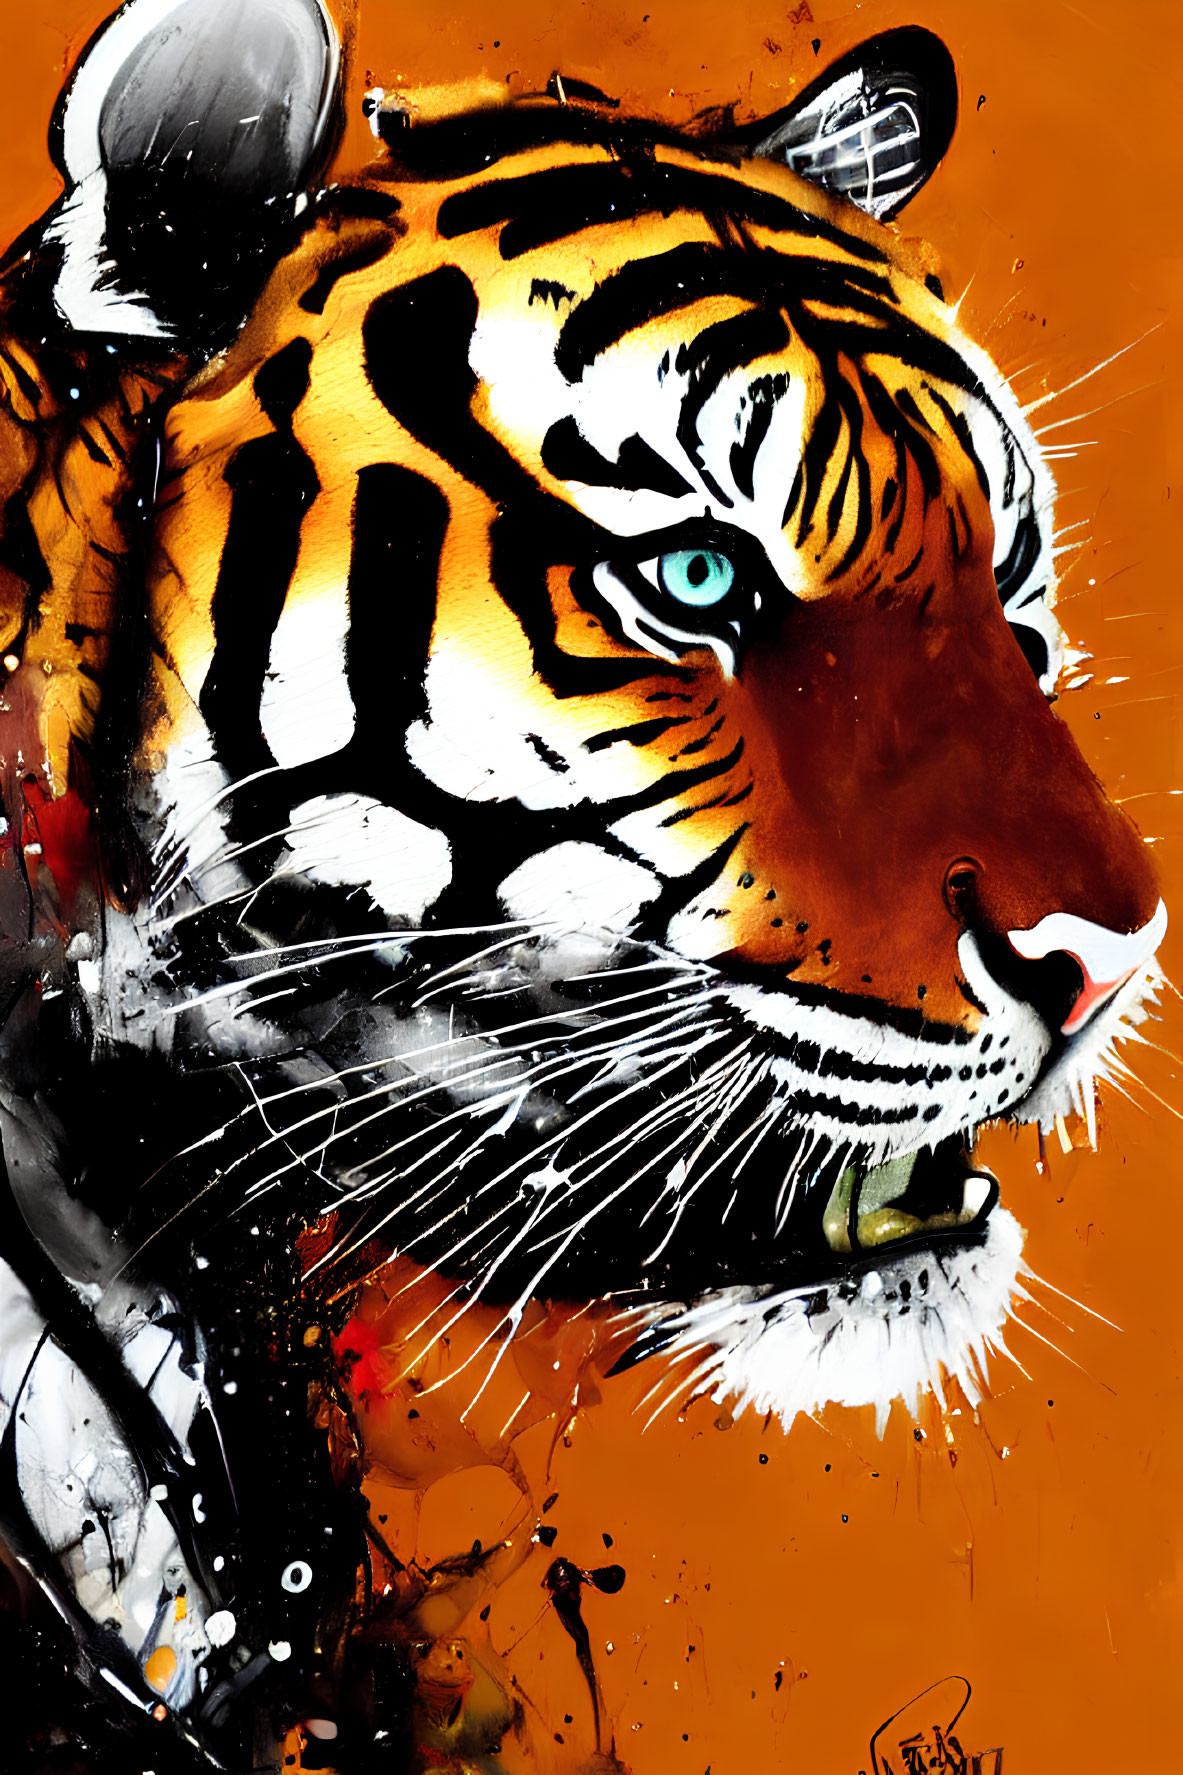 Digital Art: Tiger Head With Blue Eyes on Orange Background